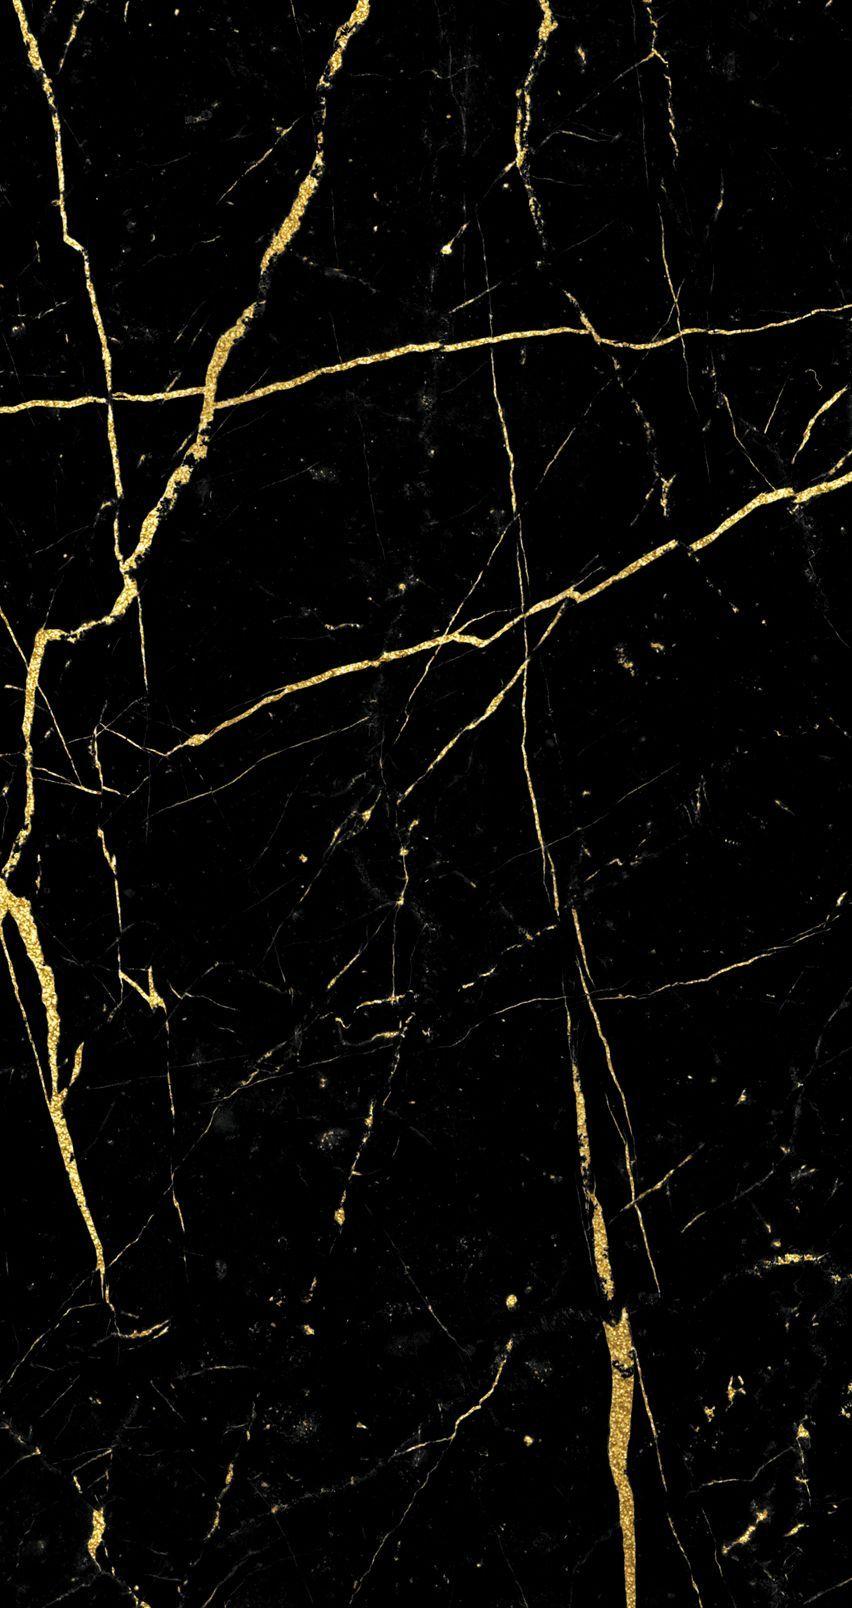 Wallpaper IPhone6 Black Gold Marble 852×608 Pixels